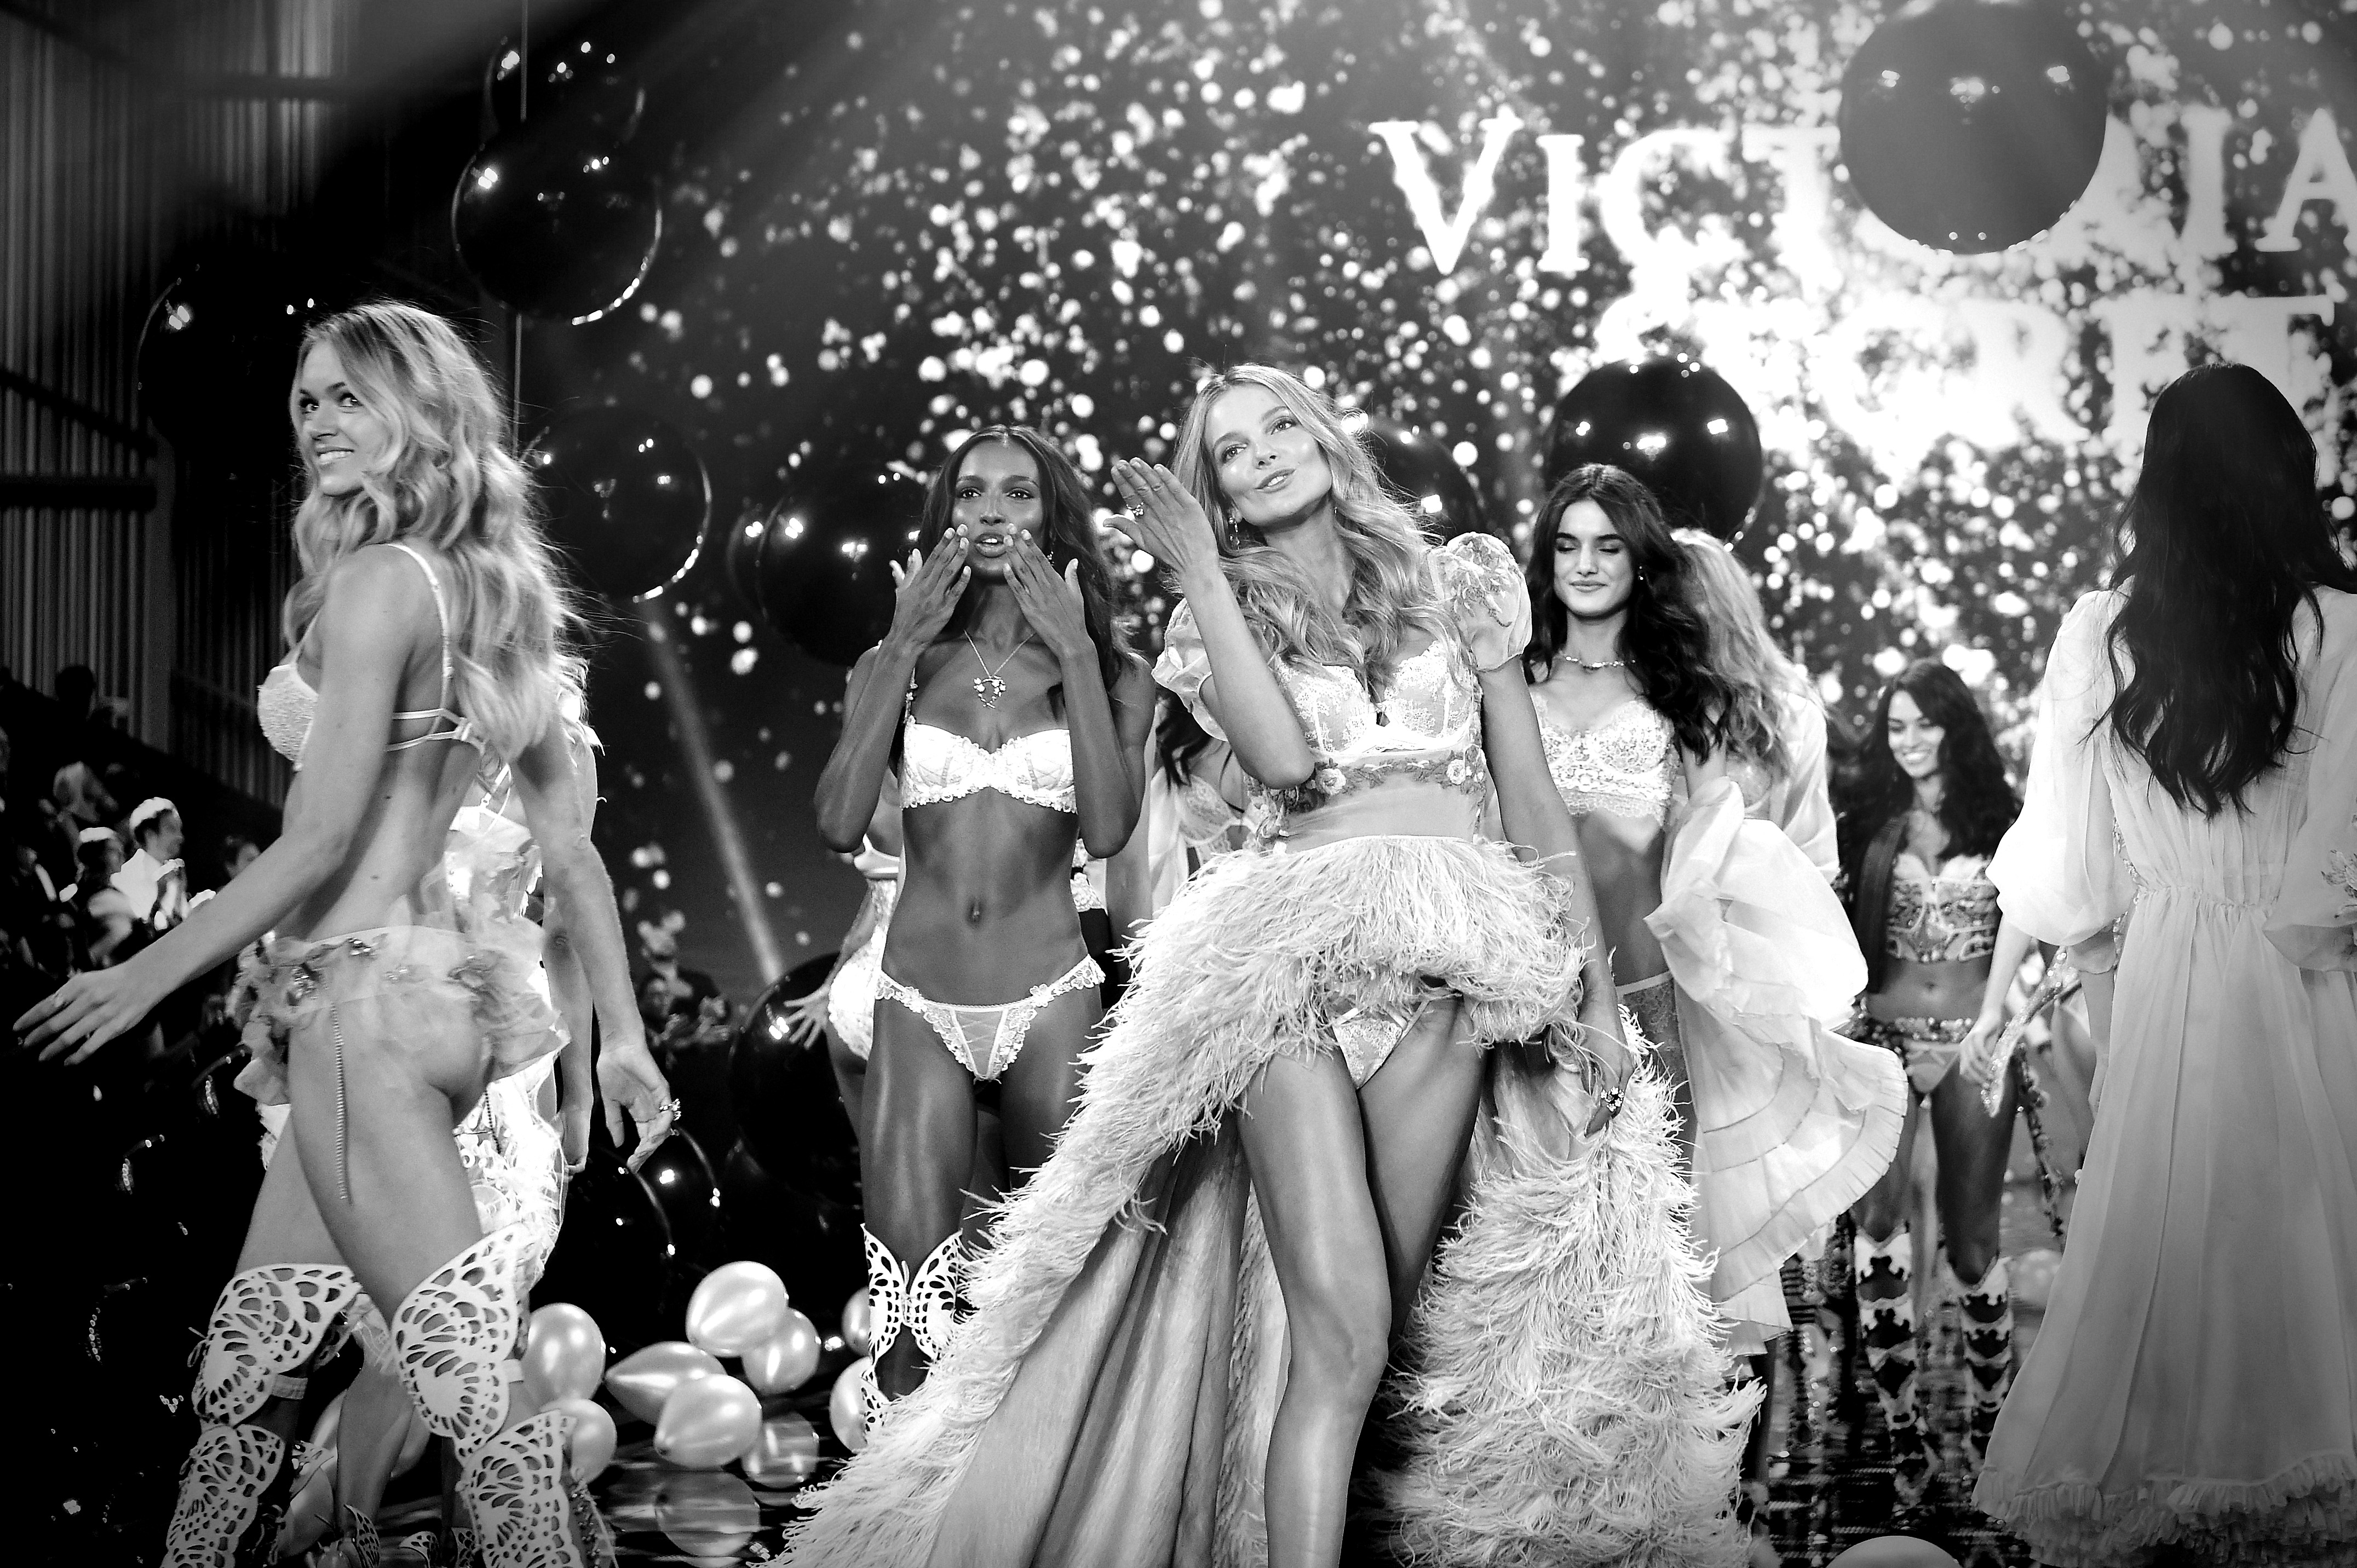 Victoria's Secret Fantasy Bras: Price, Angels and More